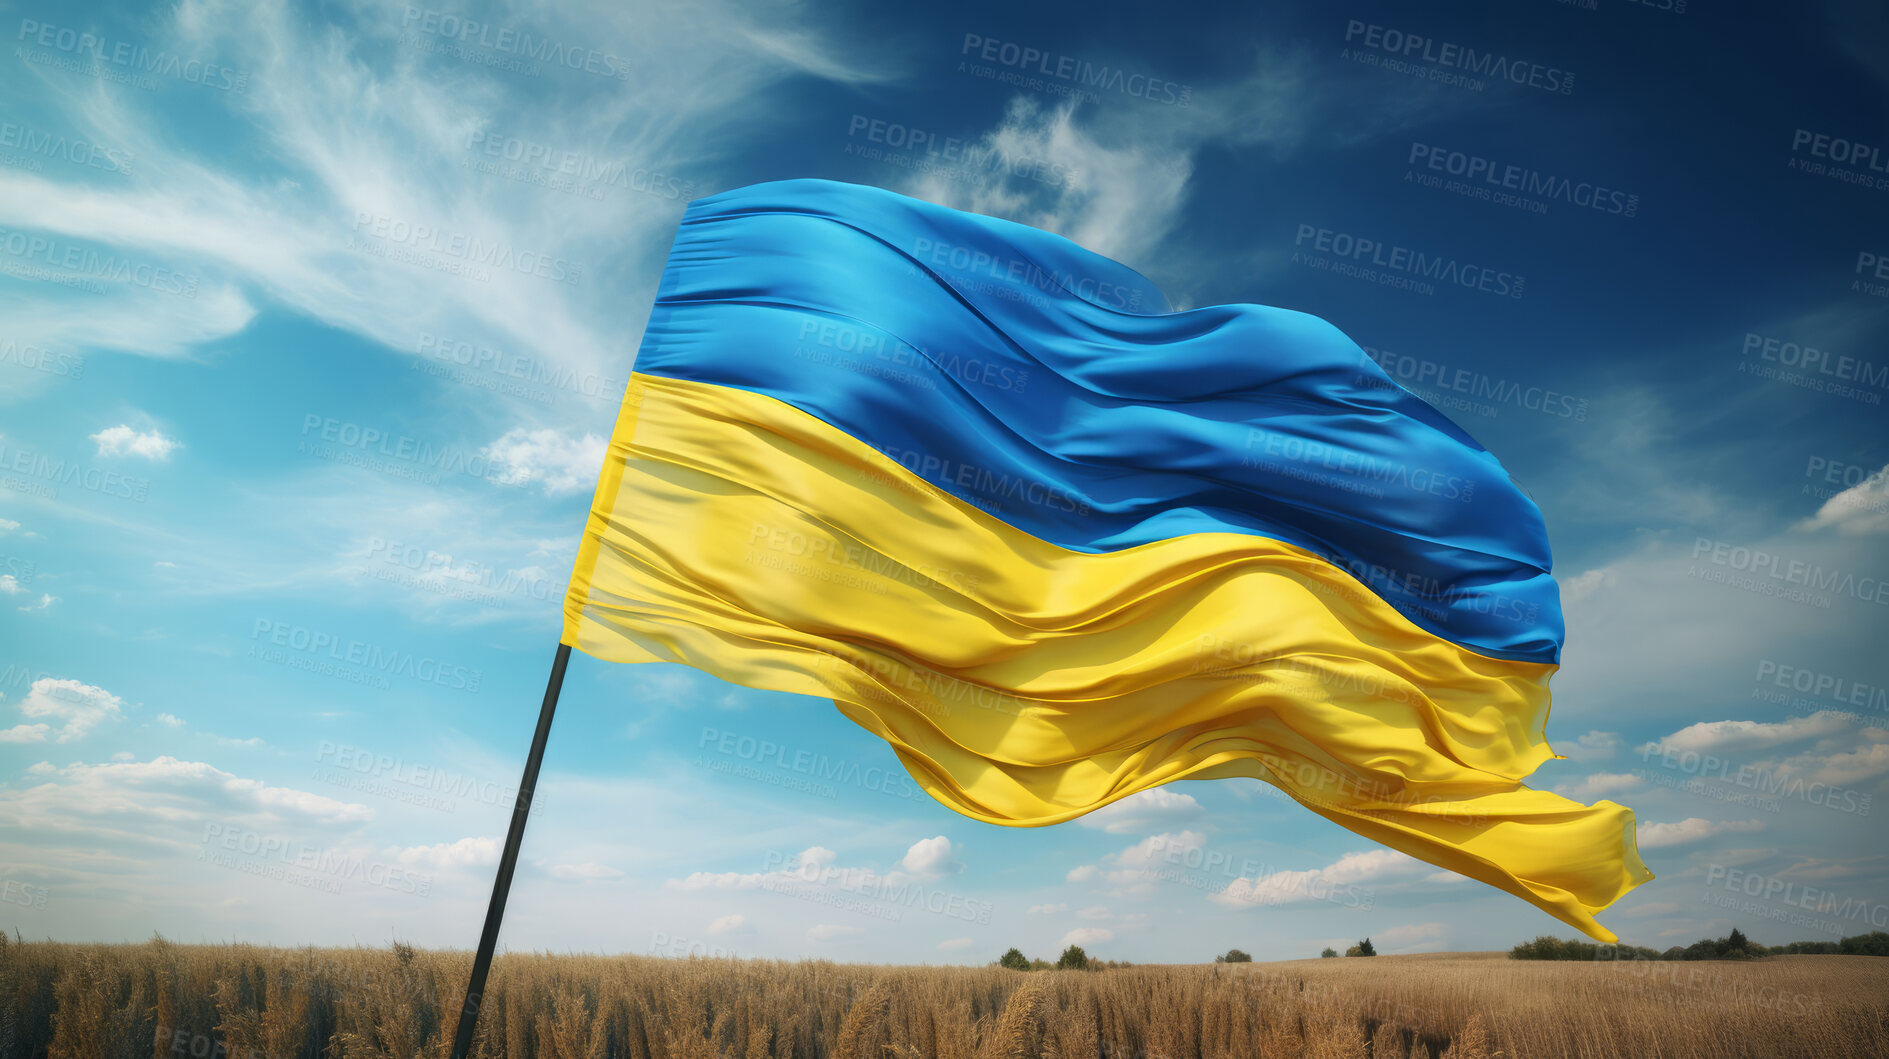 Buy stock photo Ukraine flag in the wind. Symbol for patriotism, freedom, and politics concept